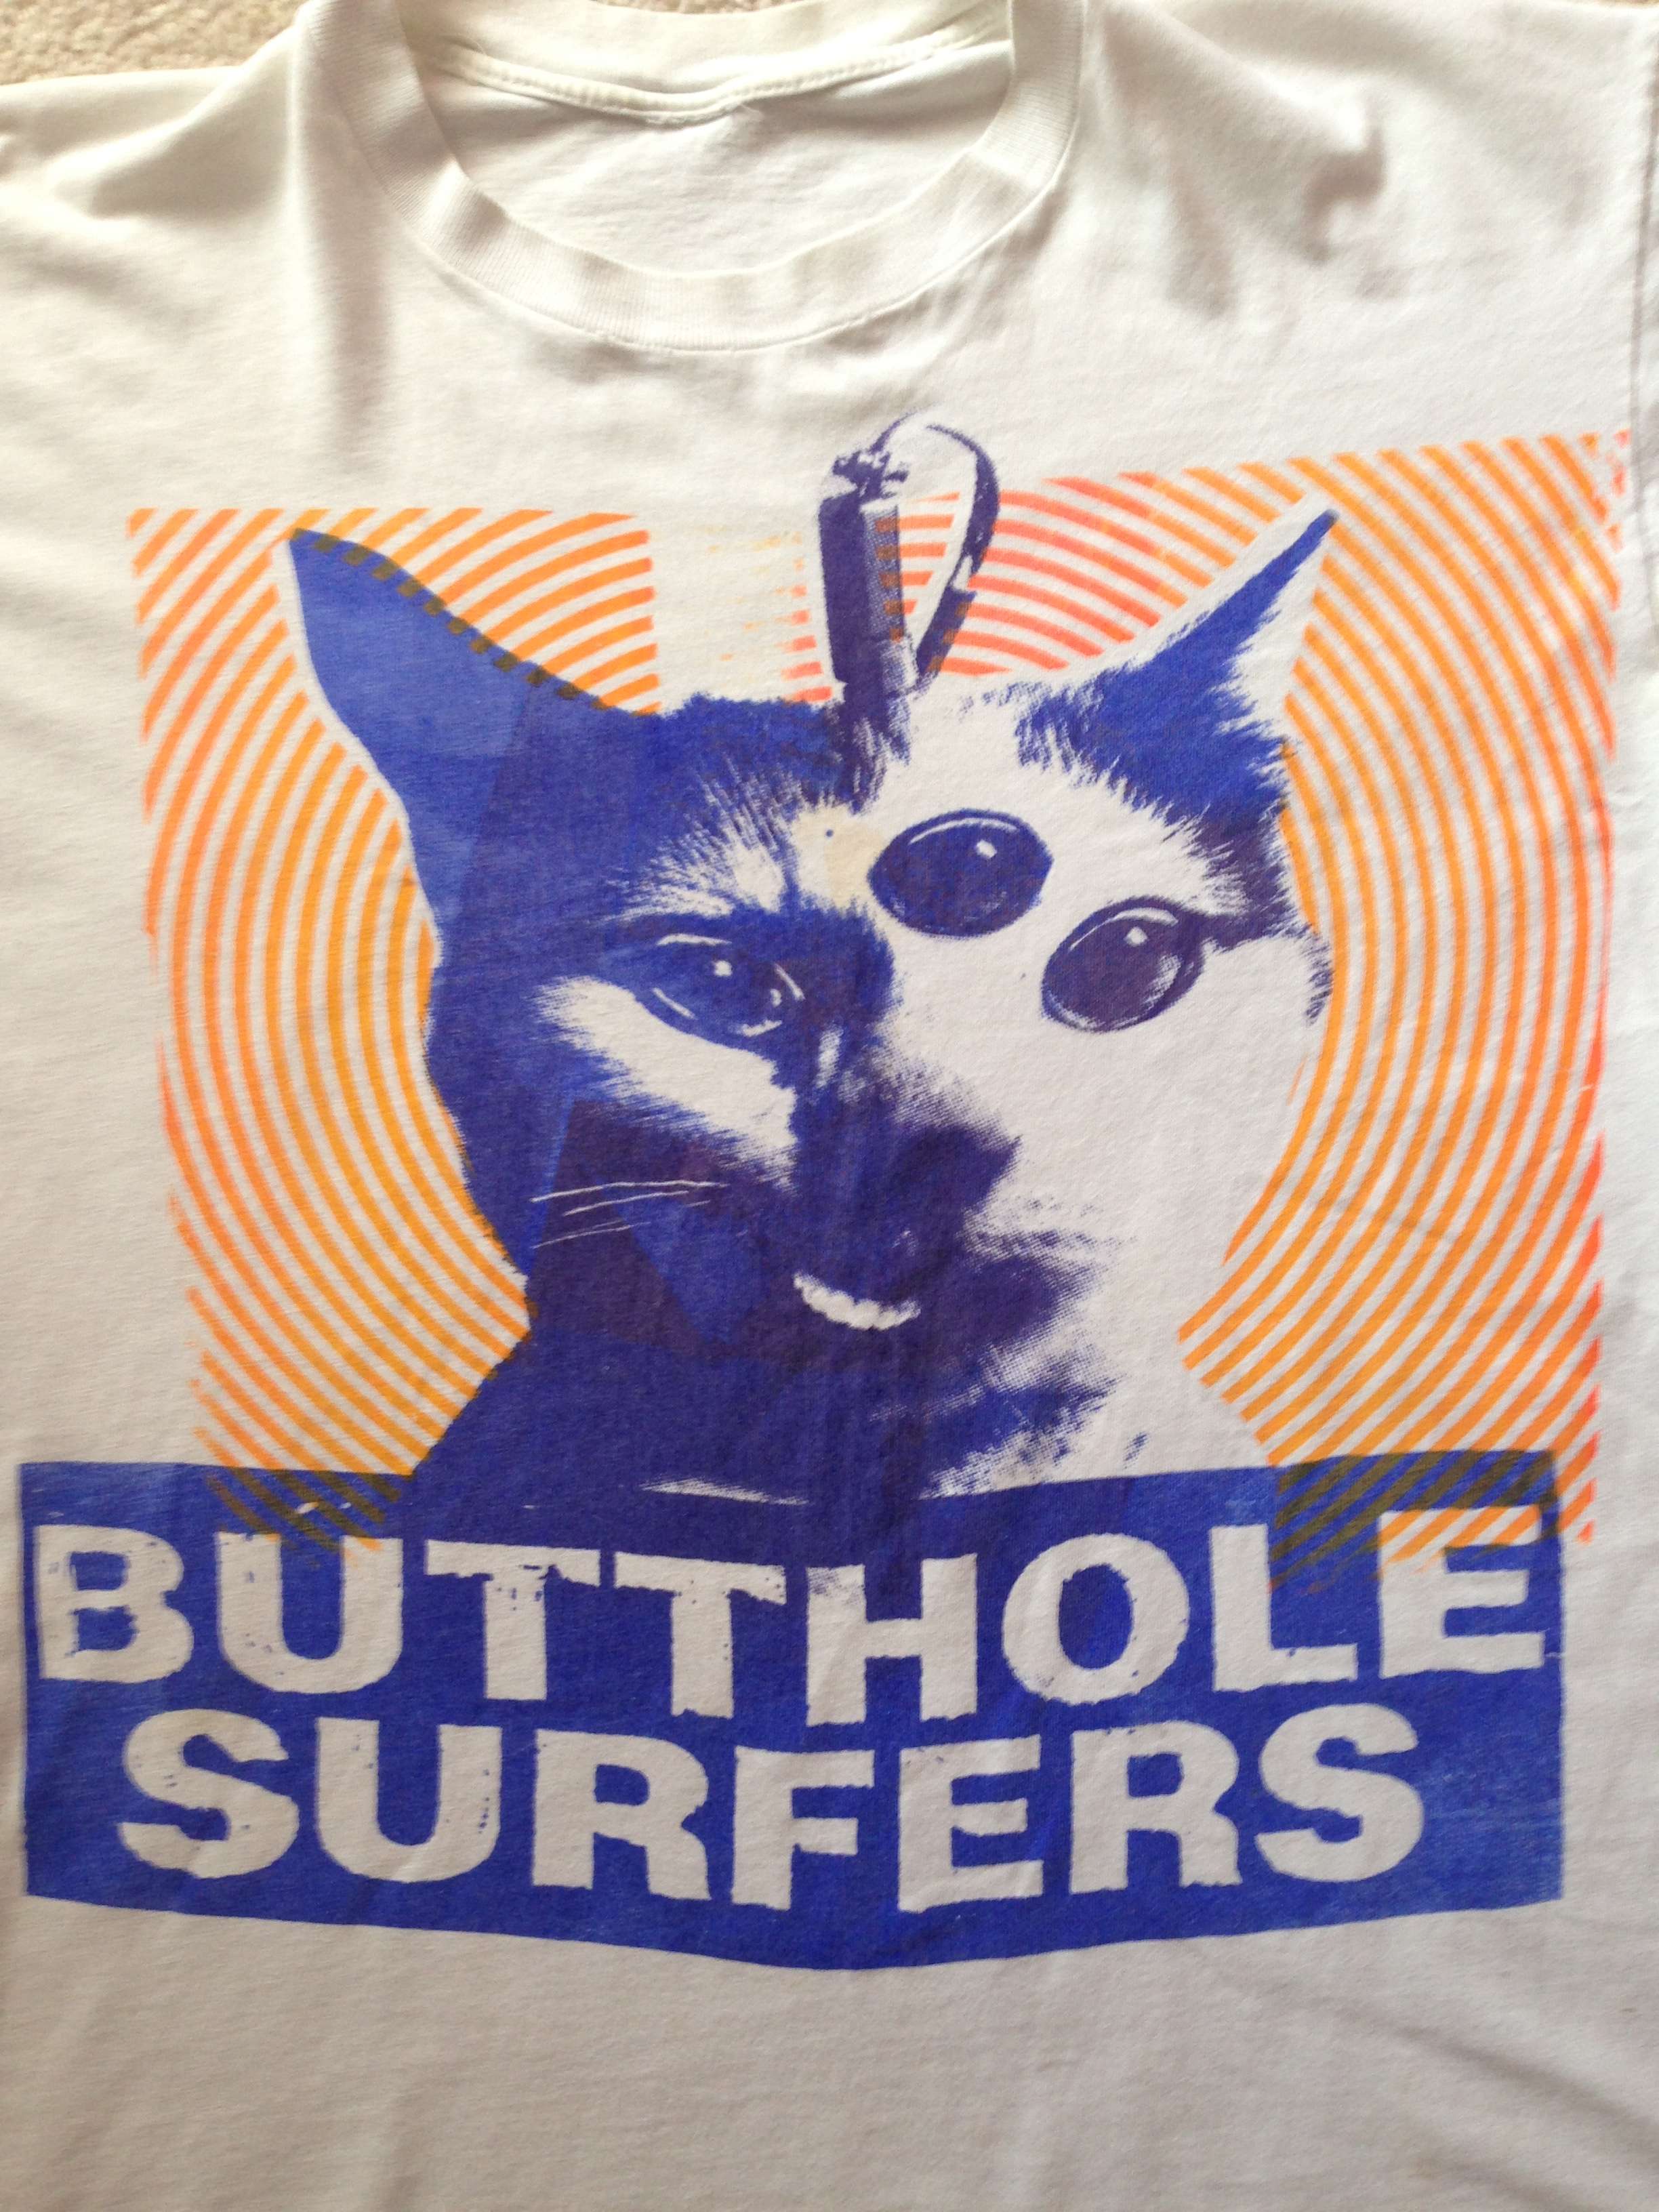 Butthole Surfers Tshirt: 3 Eyed Cat - Vintage T-Shirt Forum